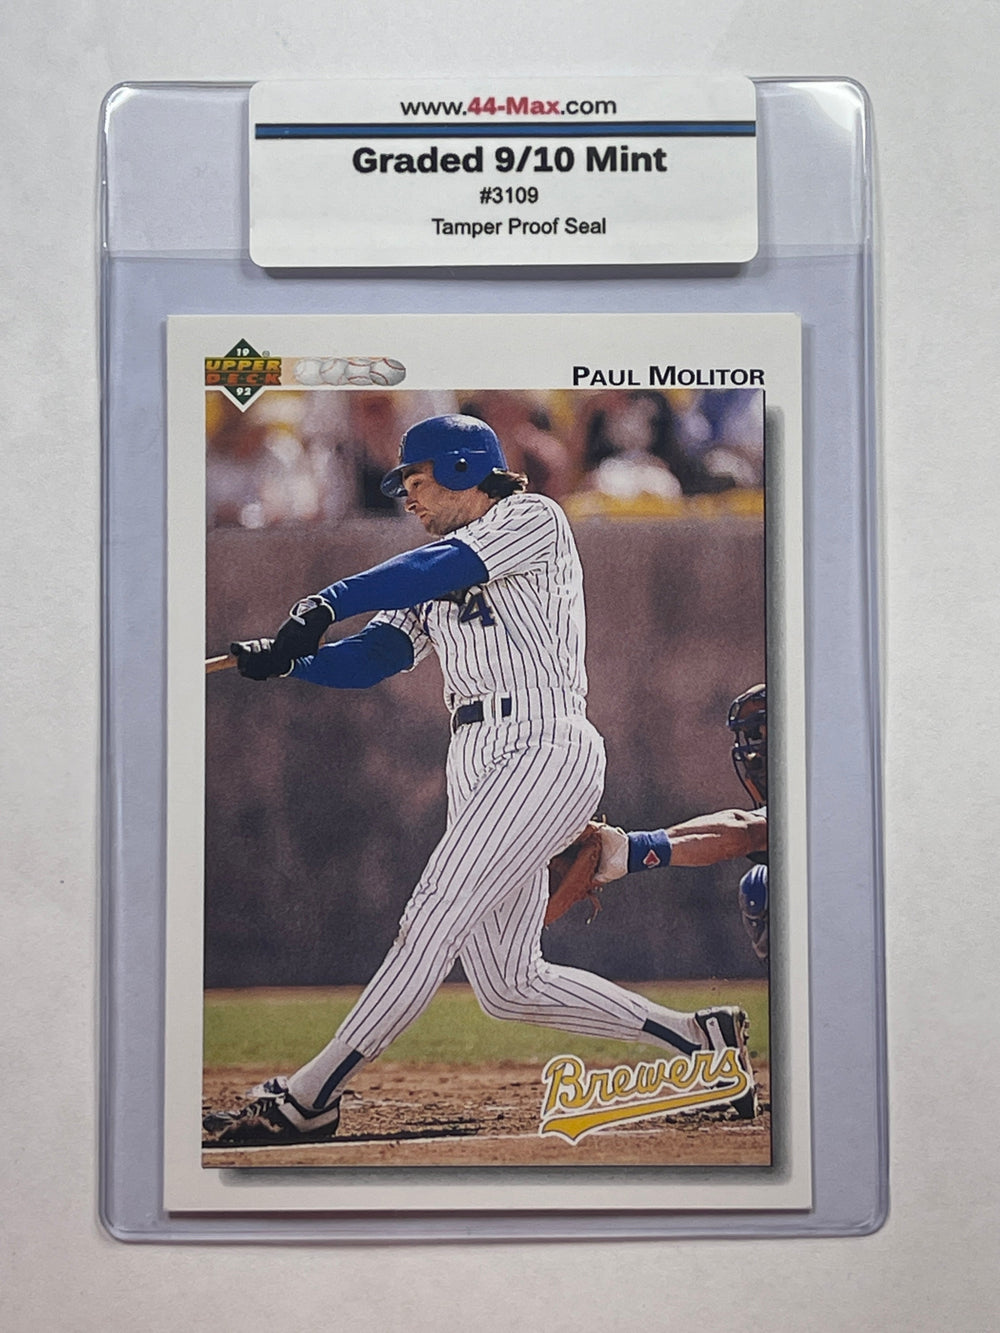 Paul Molitor 1992 Upper Deck Baseball Card. 44-Max 9/10 MINT #3109